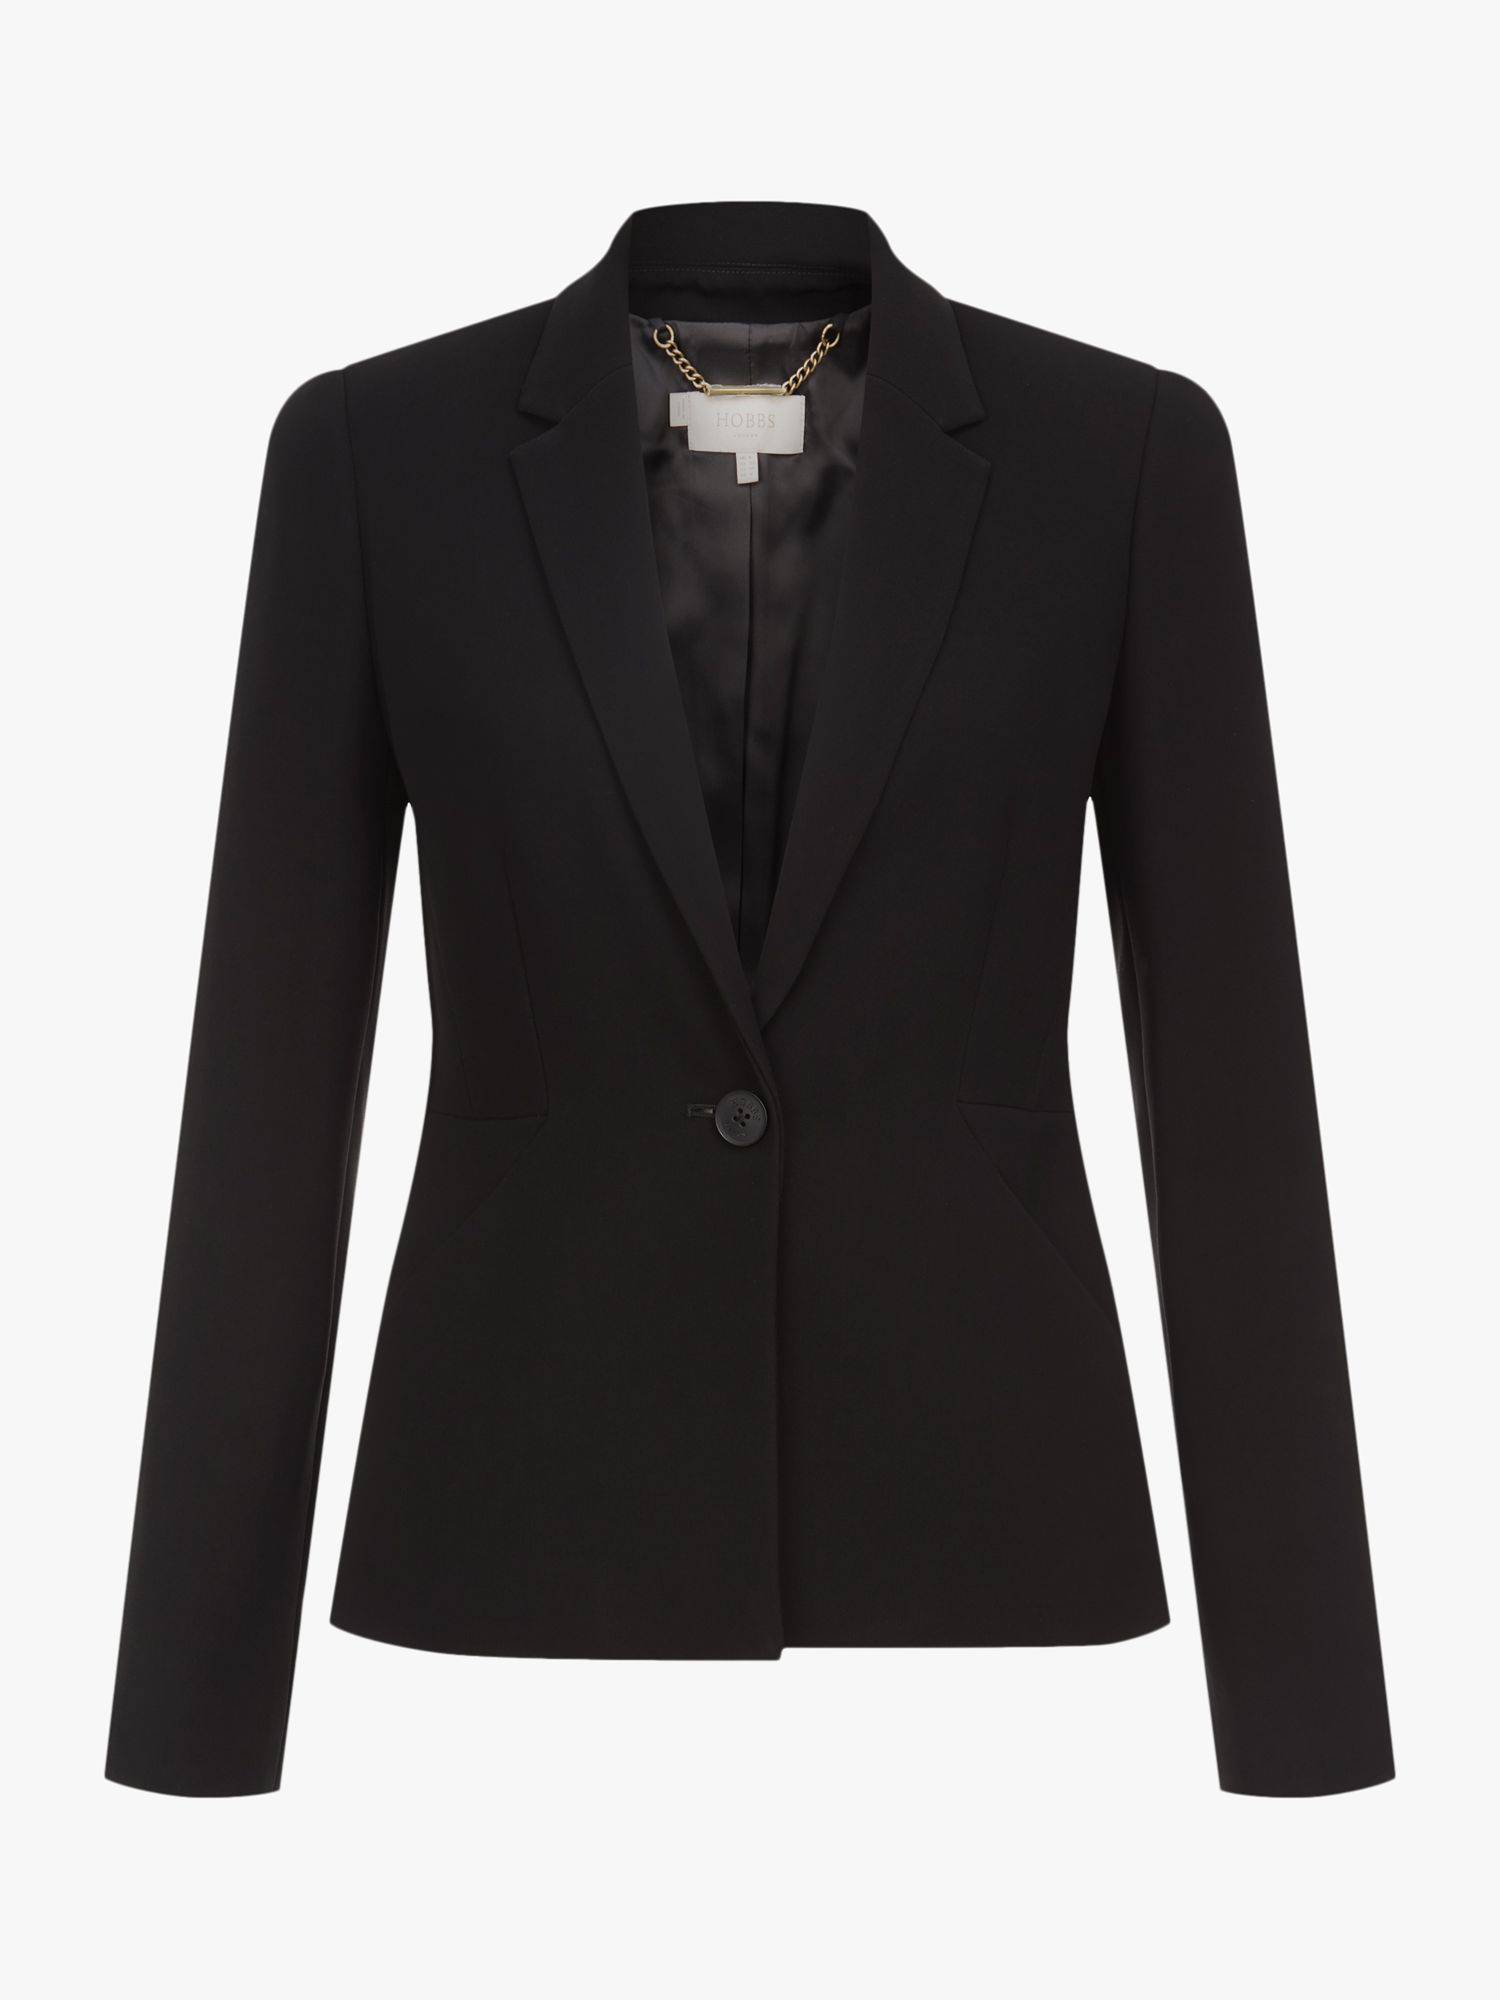 Hobbs Petite Alva Blazer Jacket, Black at John Lewis & Partners